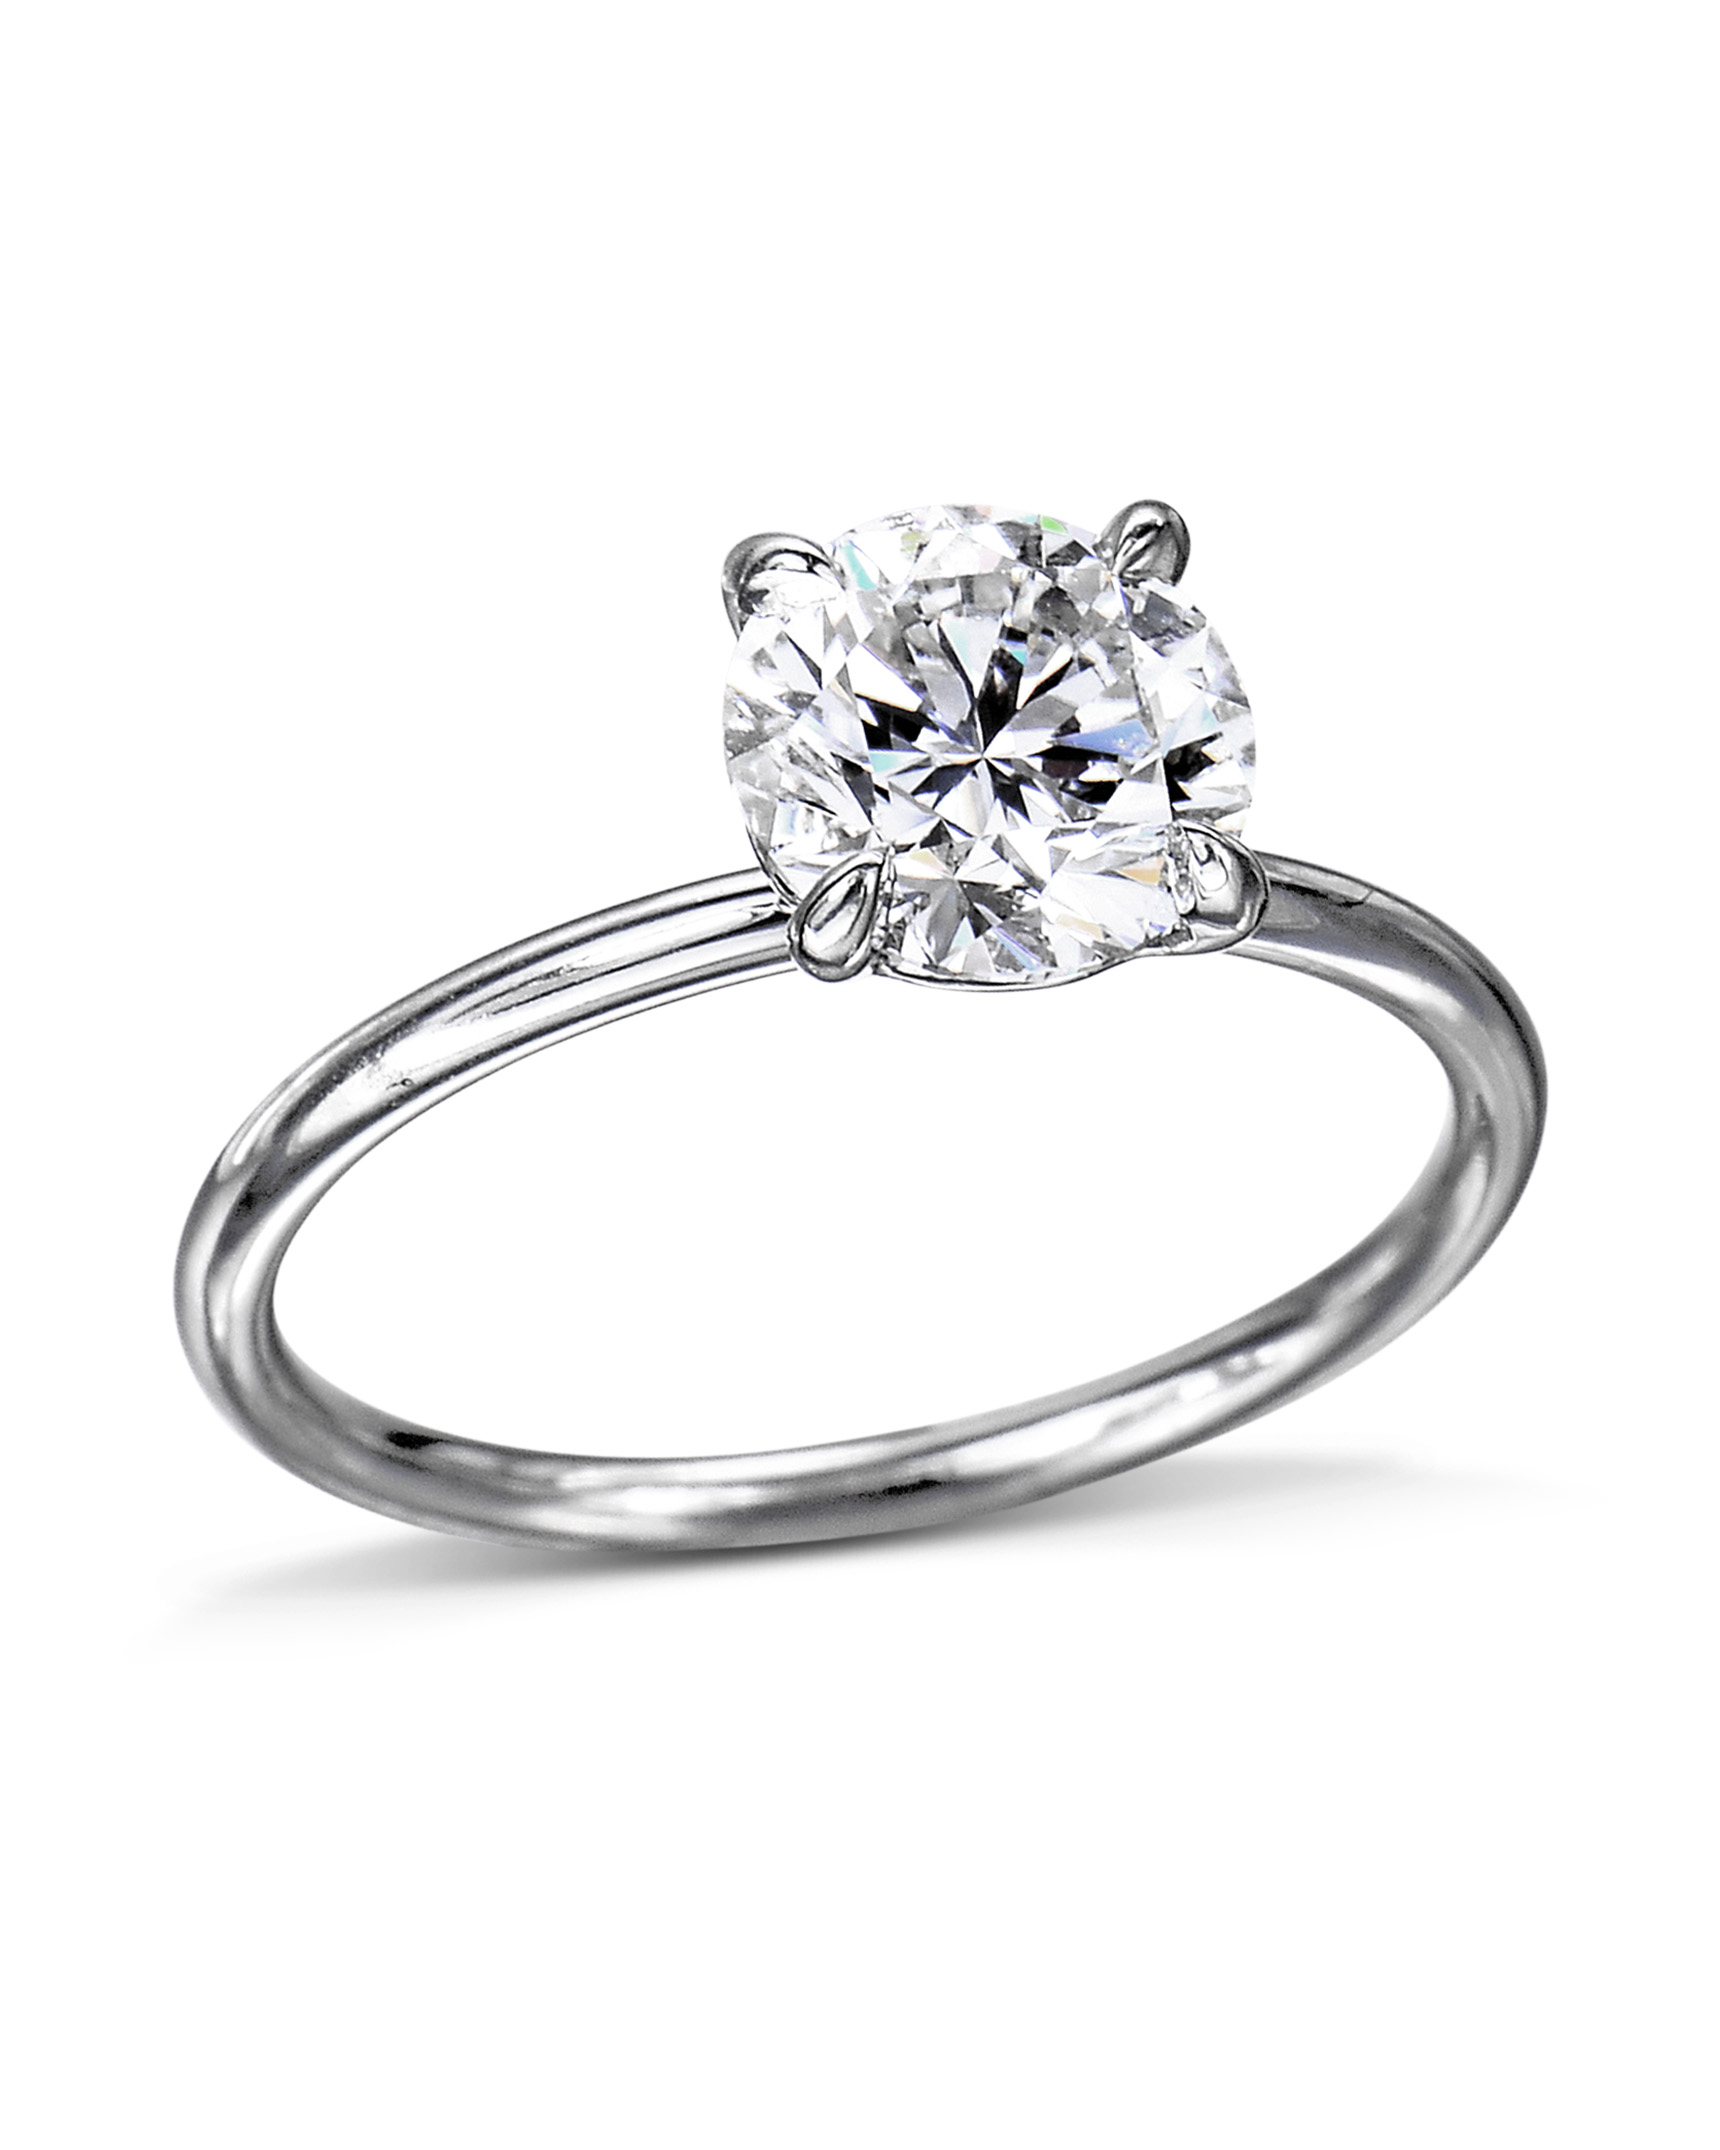 Glitz Design Diamond Engagement Ring for Women Round Solitaire 4-prong  Platinum 0.50 carat (I,I1) (RS 4) | Amazon.com